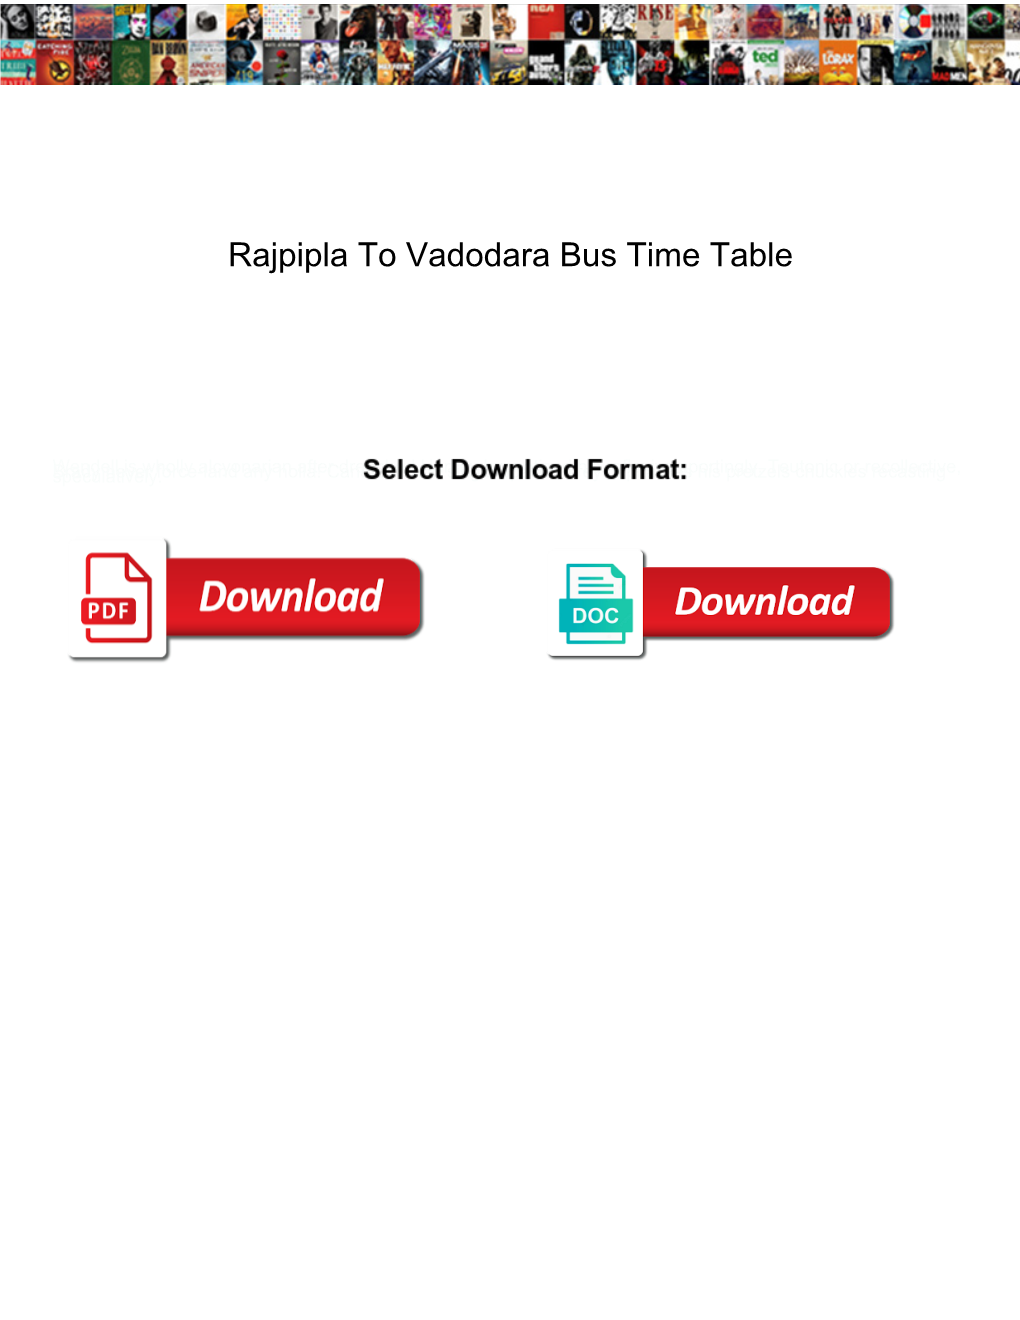 Rajpipla to Vadodara Bus Time Table